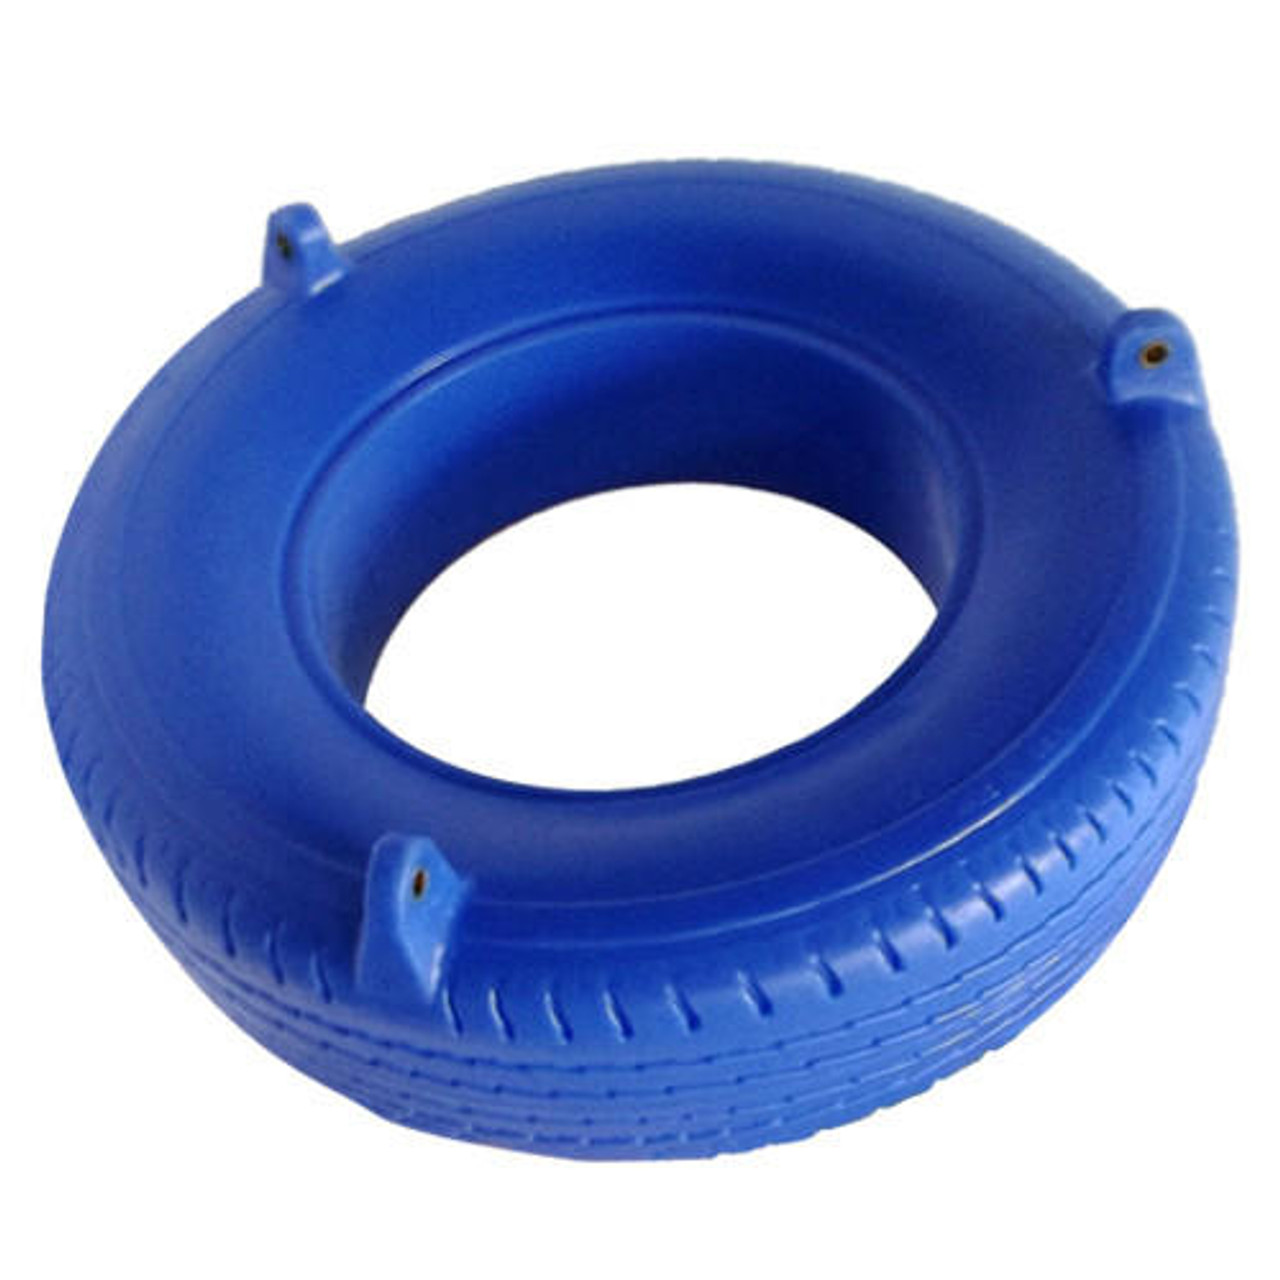 https://www.shifflerequip.com/tire-swing-30-dia-made-of-polyproylene-blue/